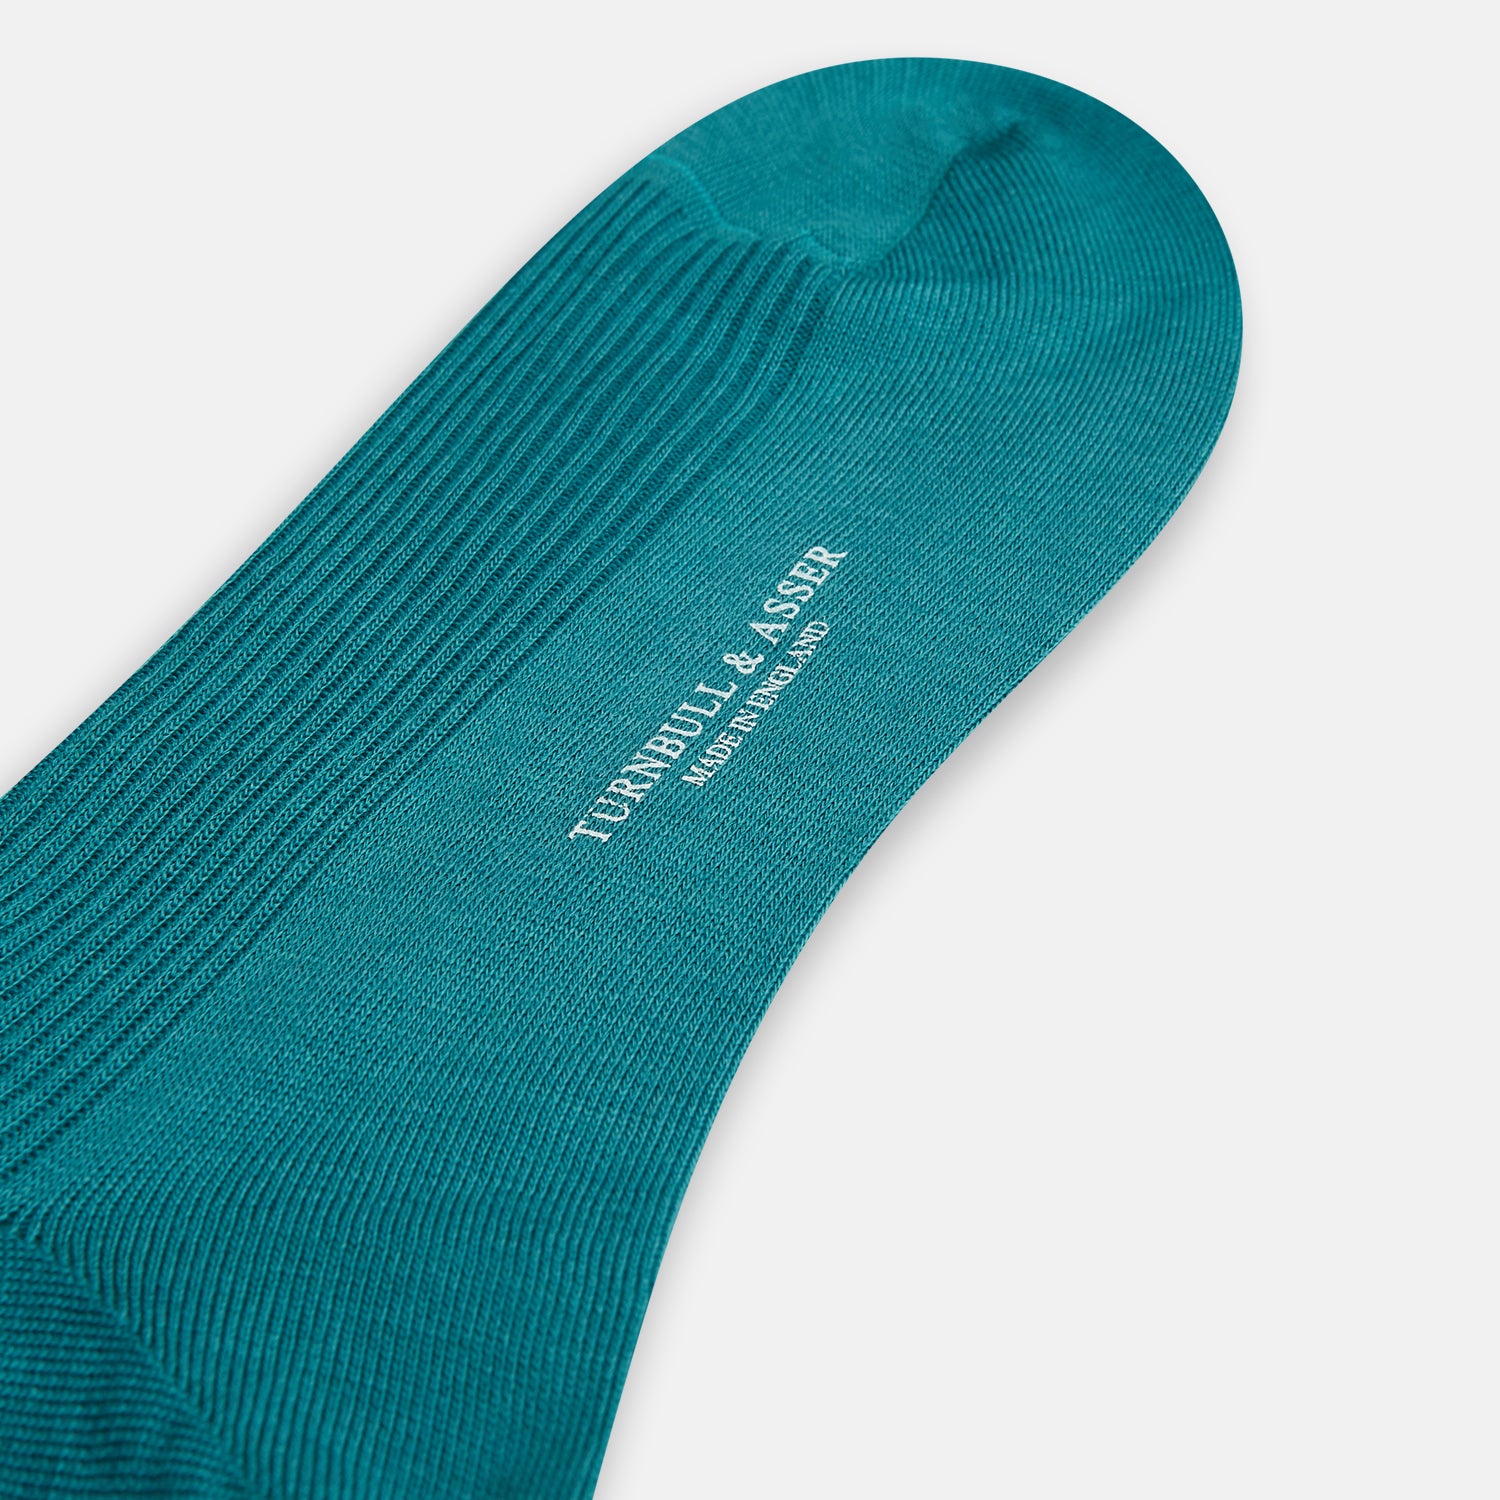 Teal Mid-Length Merino Socks